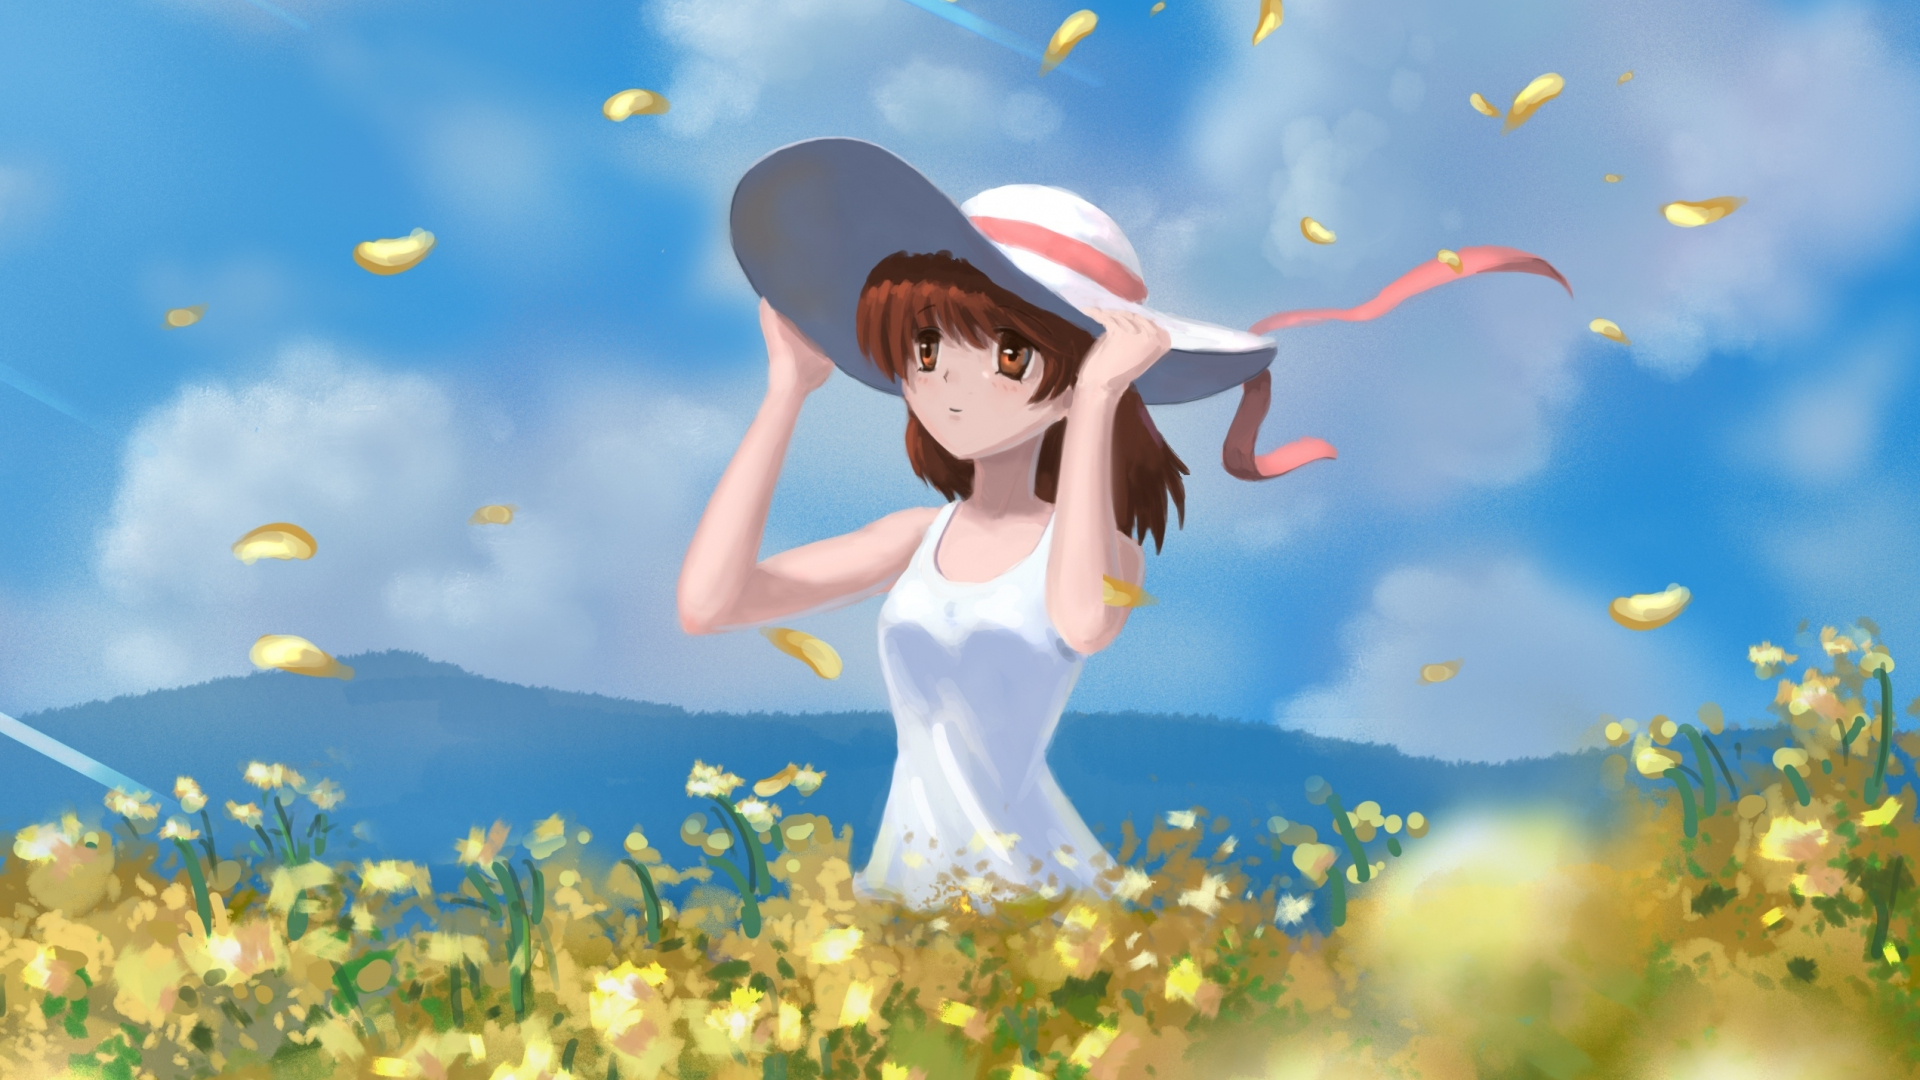 Download 1920x1080 wallpaper cute, anime girl, outdoor ...